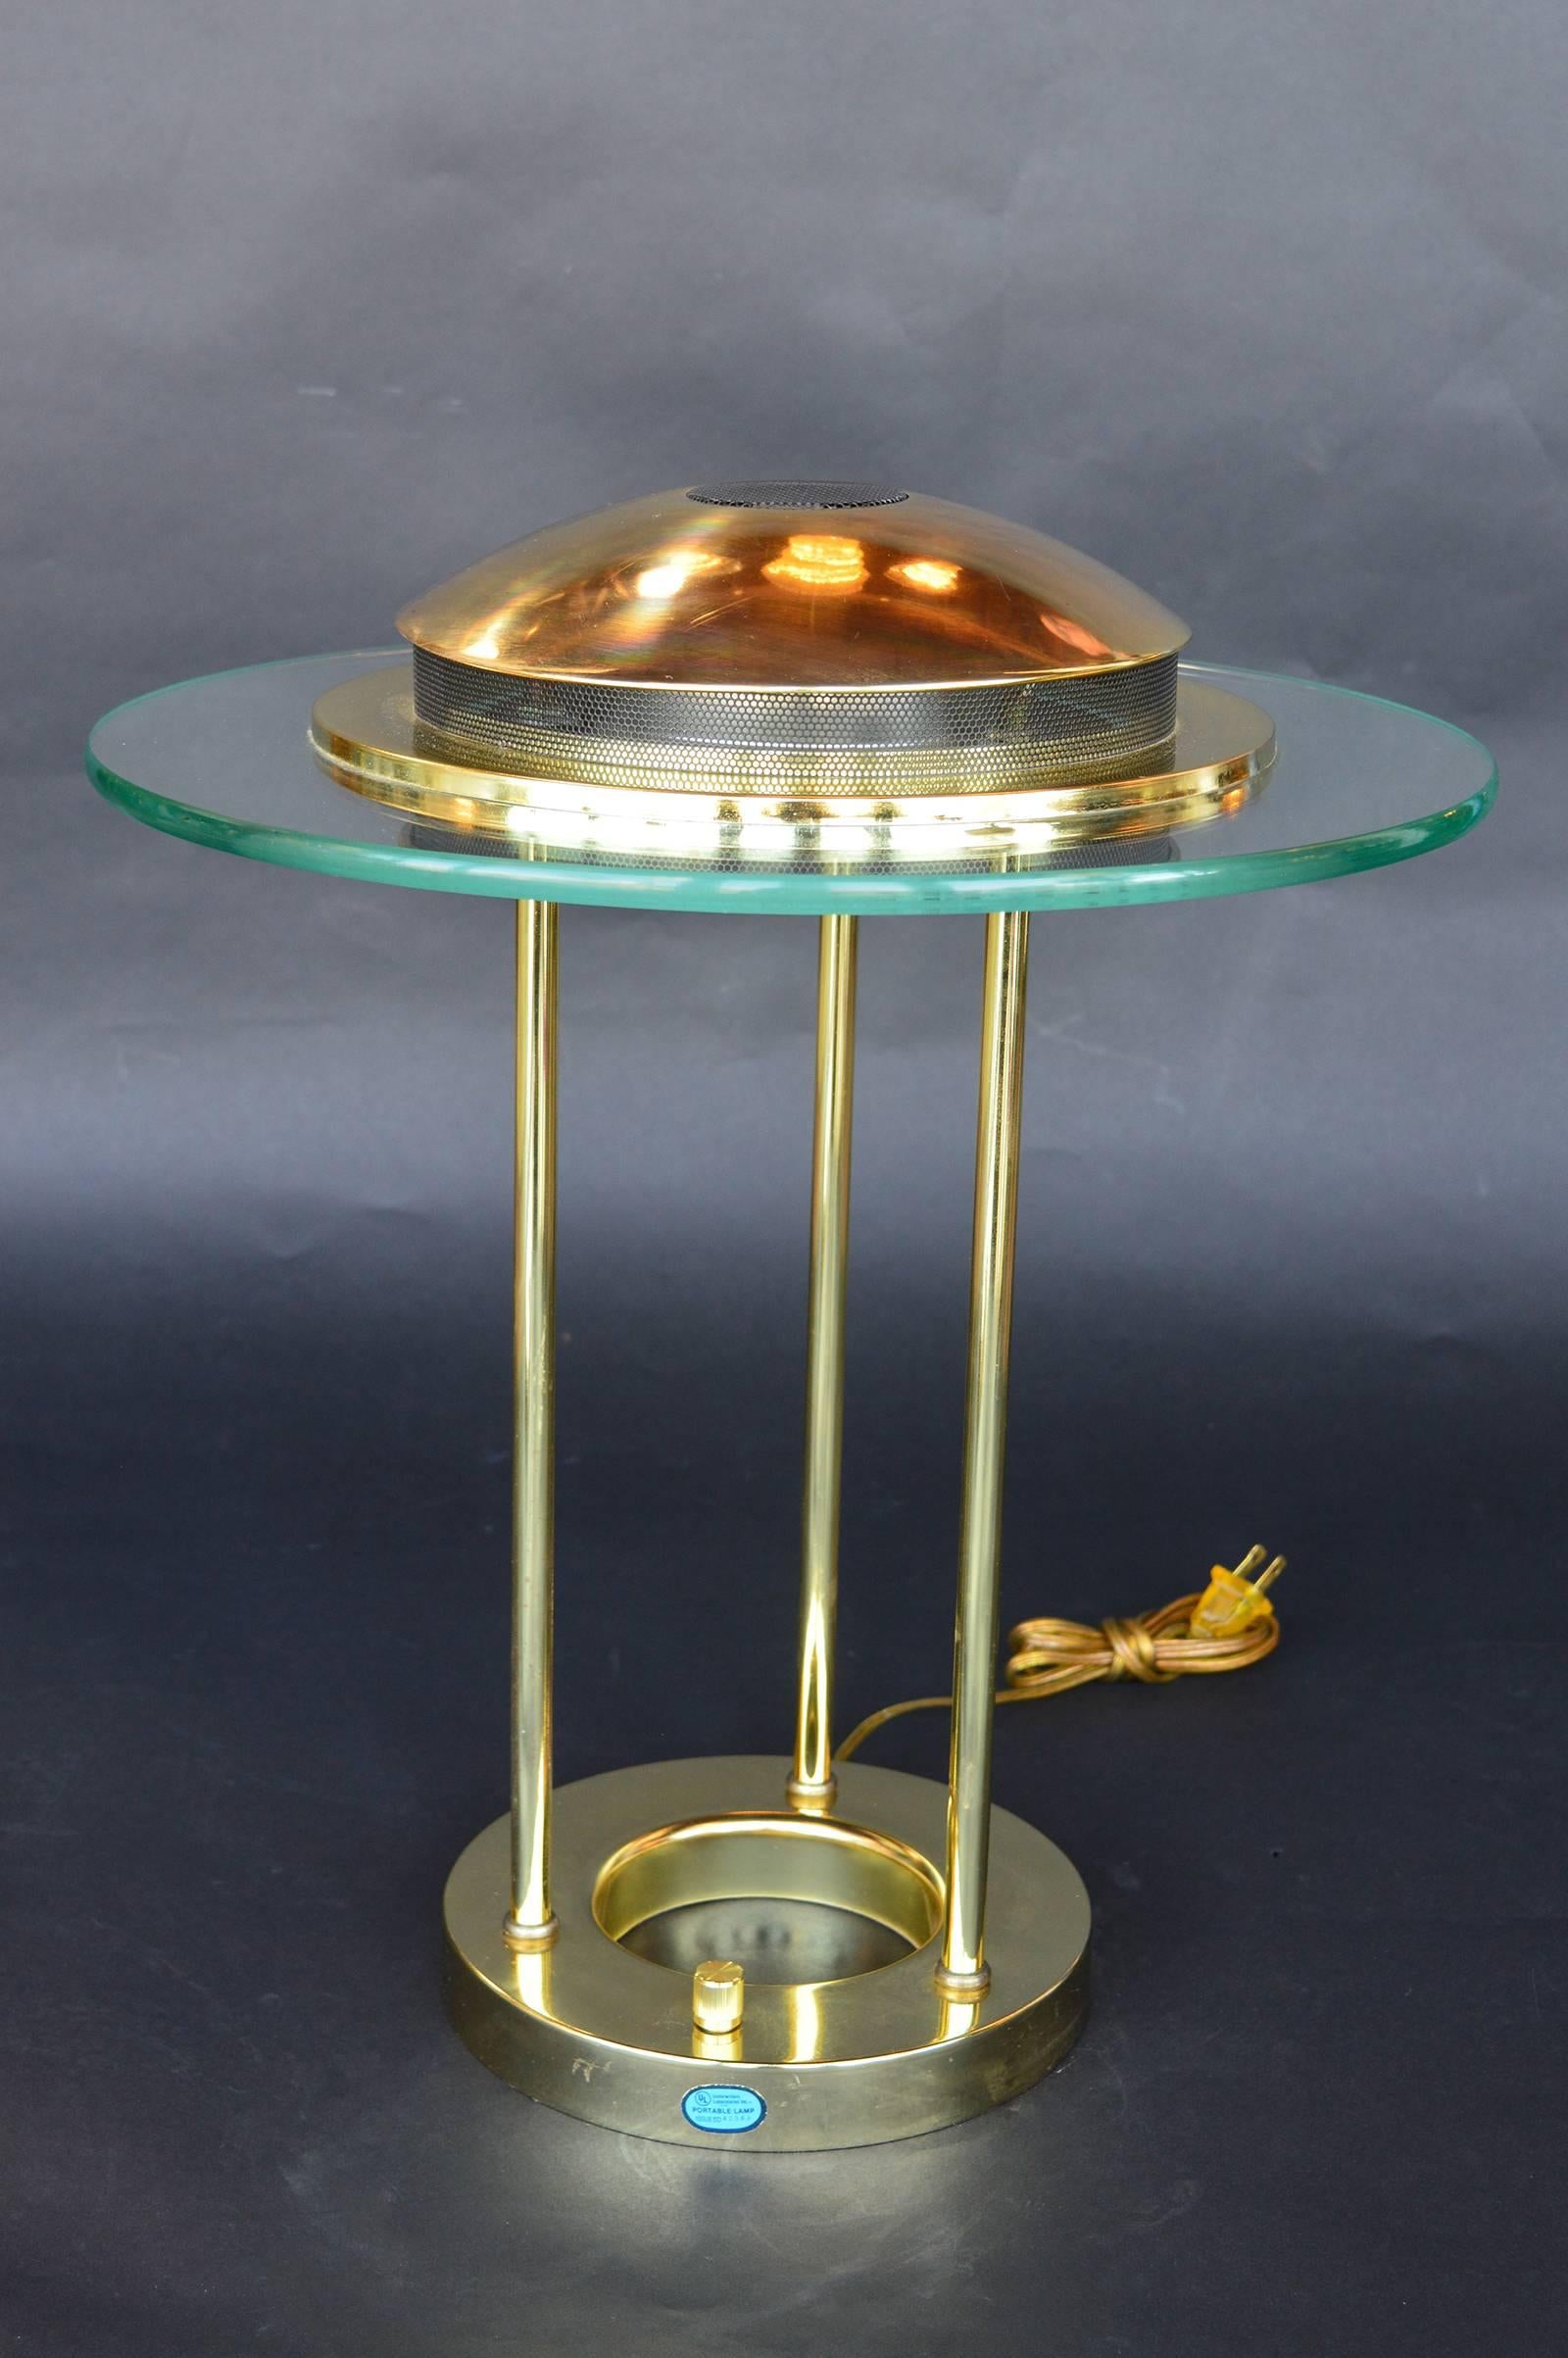 Pair of brass Saturn desk lamps by Robert Sonneman for George Kovacs.